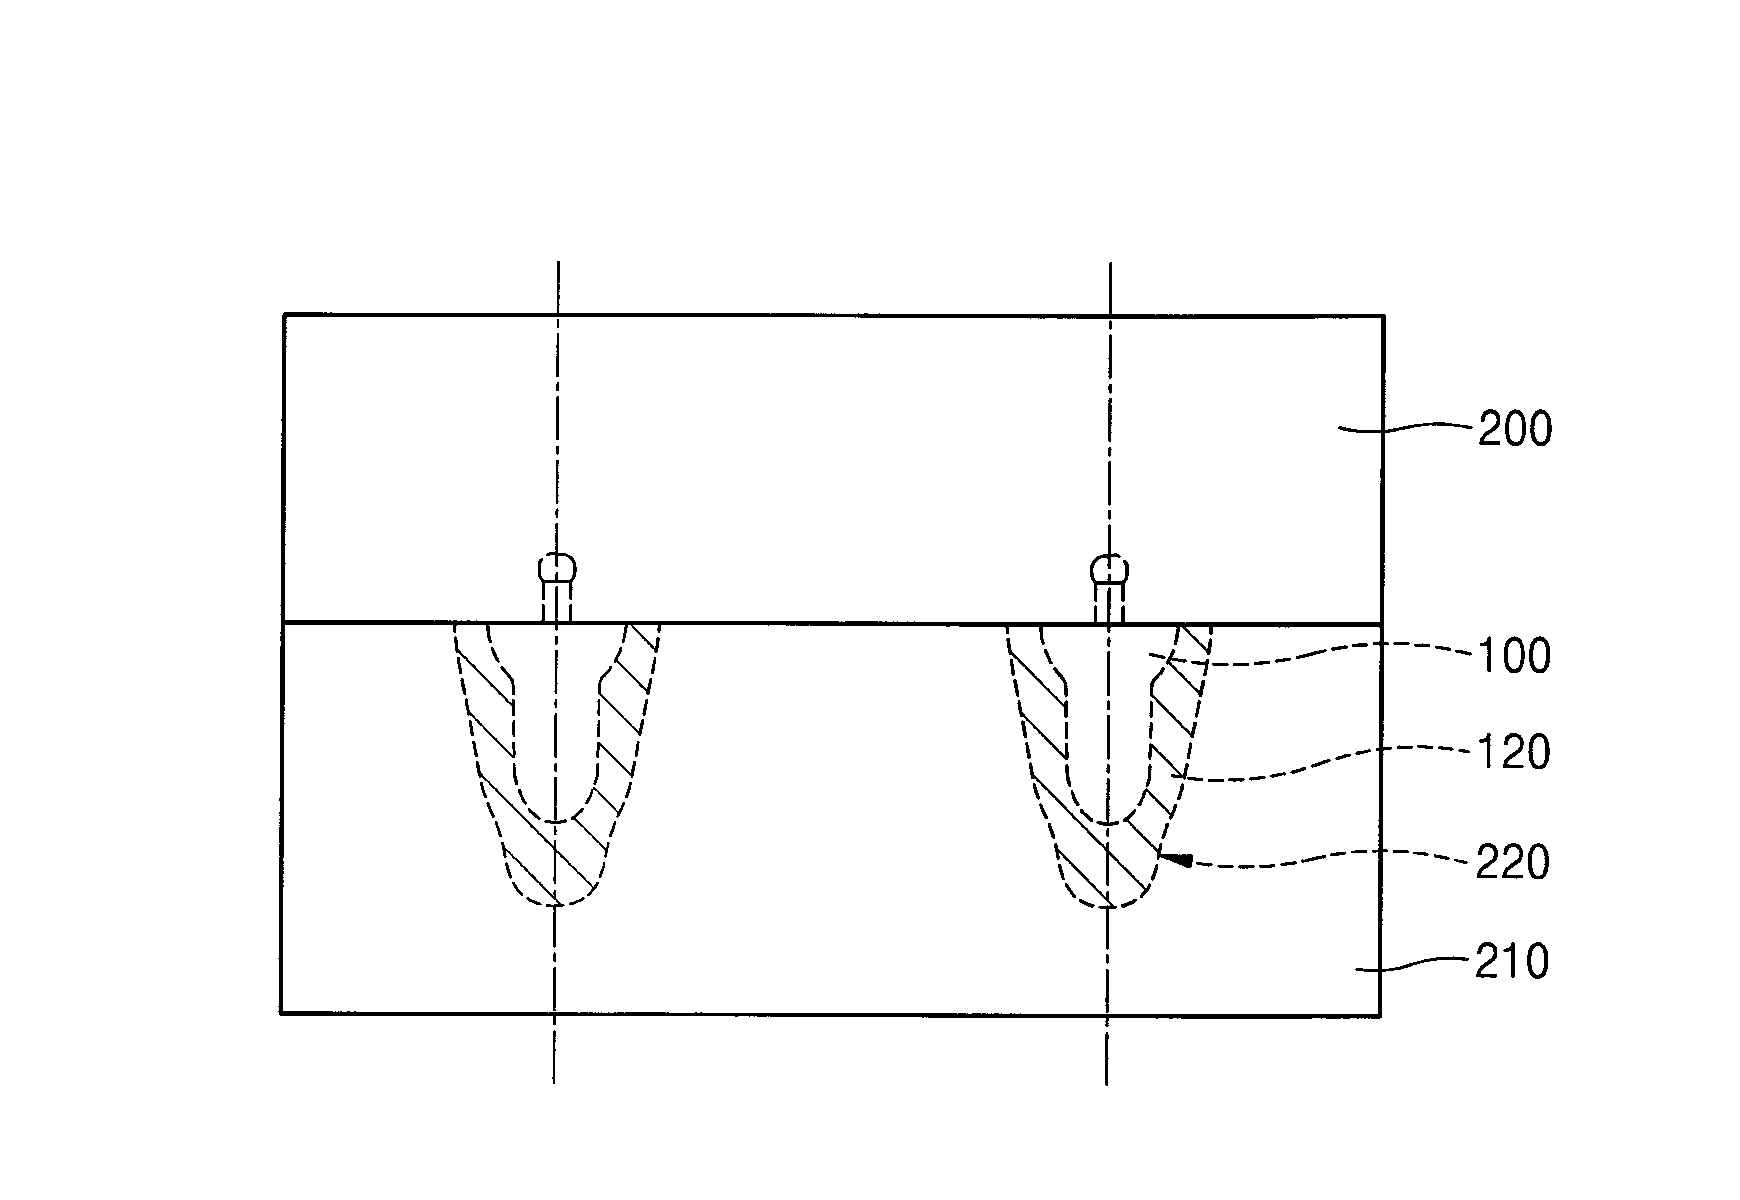 Method of fabricating an antinoise earplug